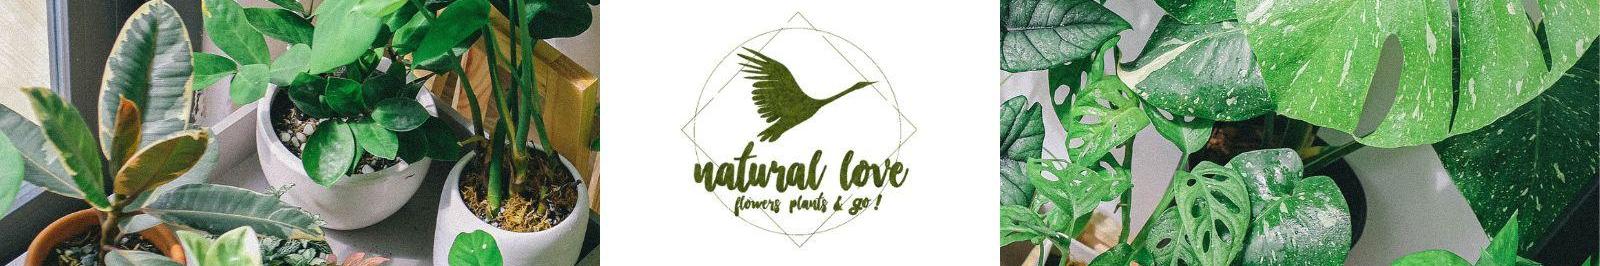 Natural love